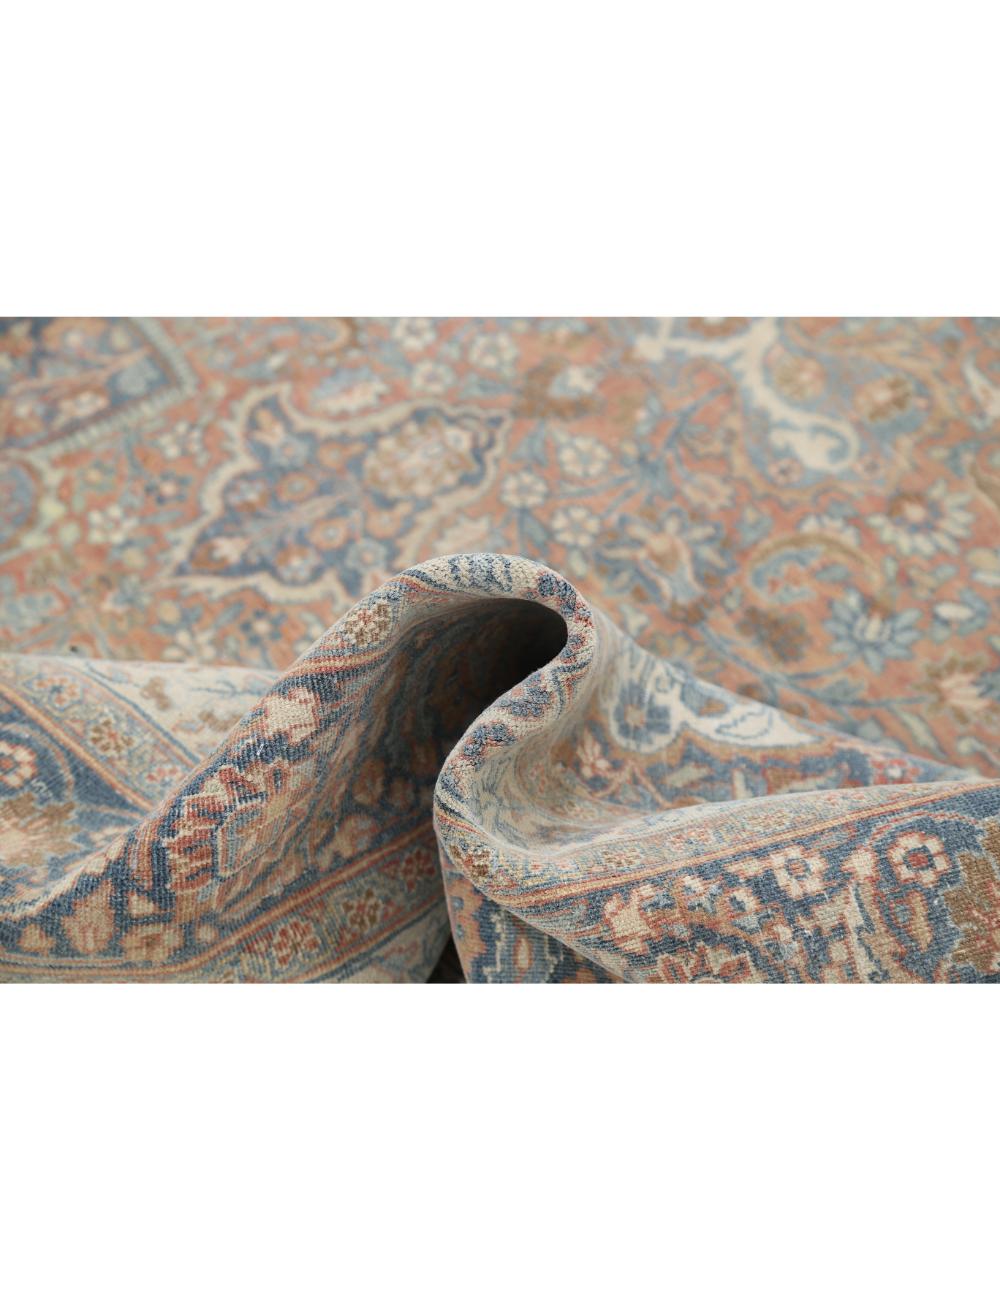 Hand Knotted Vintage Persian Tabriz Wool Rug - 7'10'' x 11'8'' Arteverk Arteverk Rugs